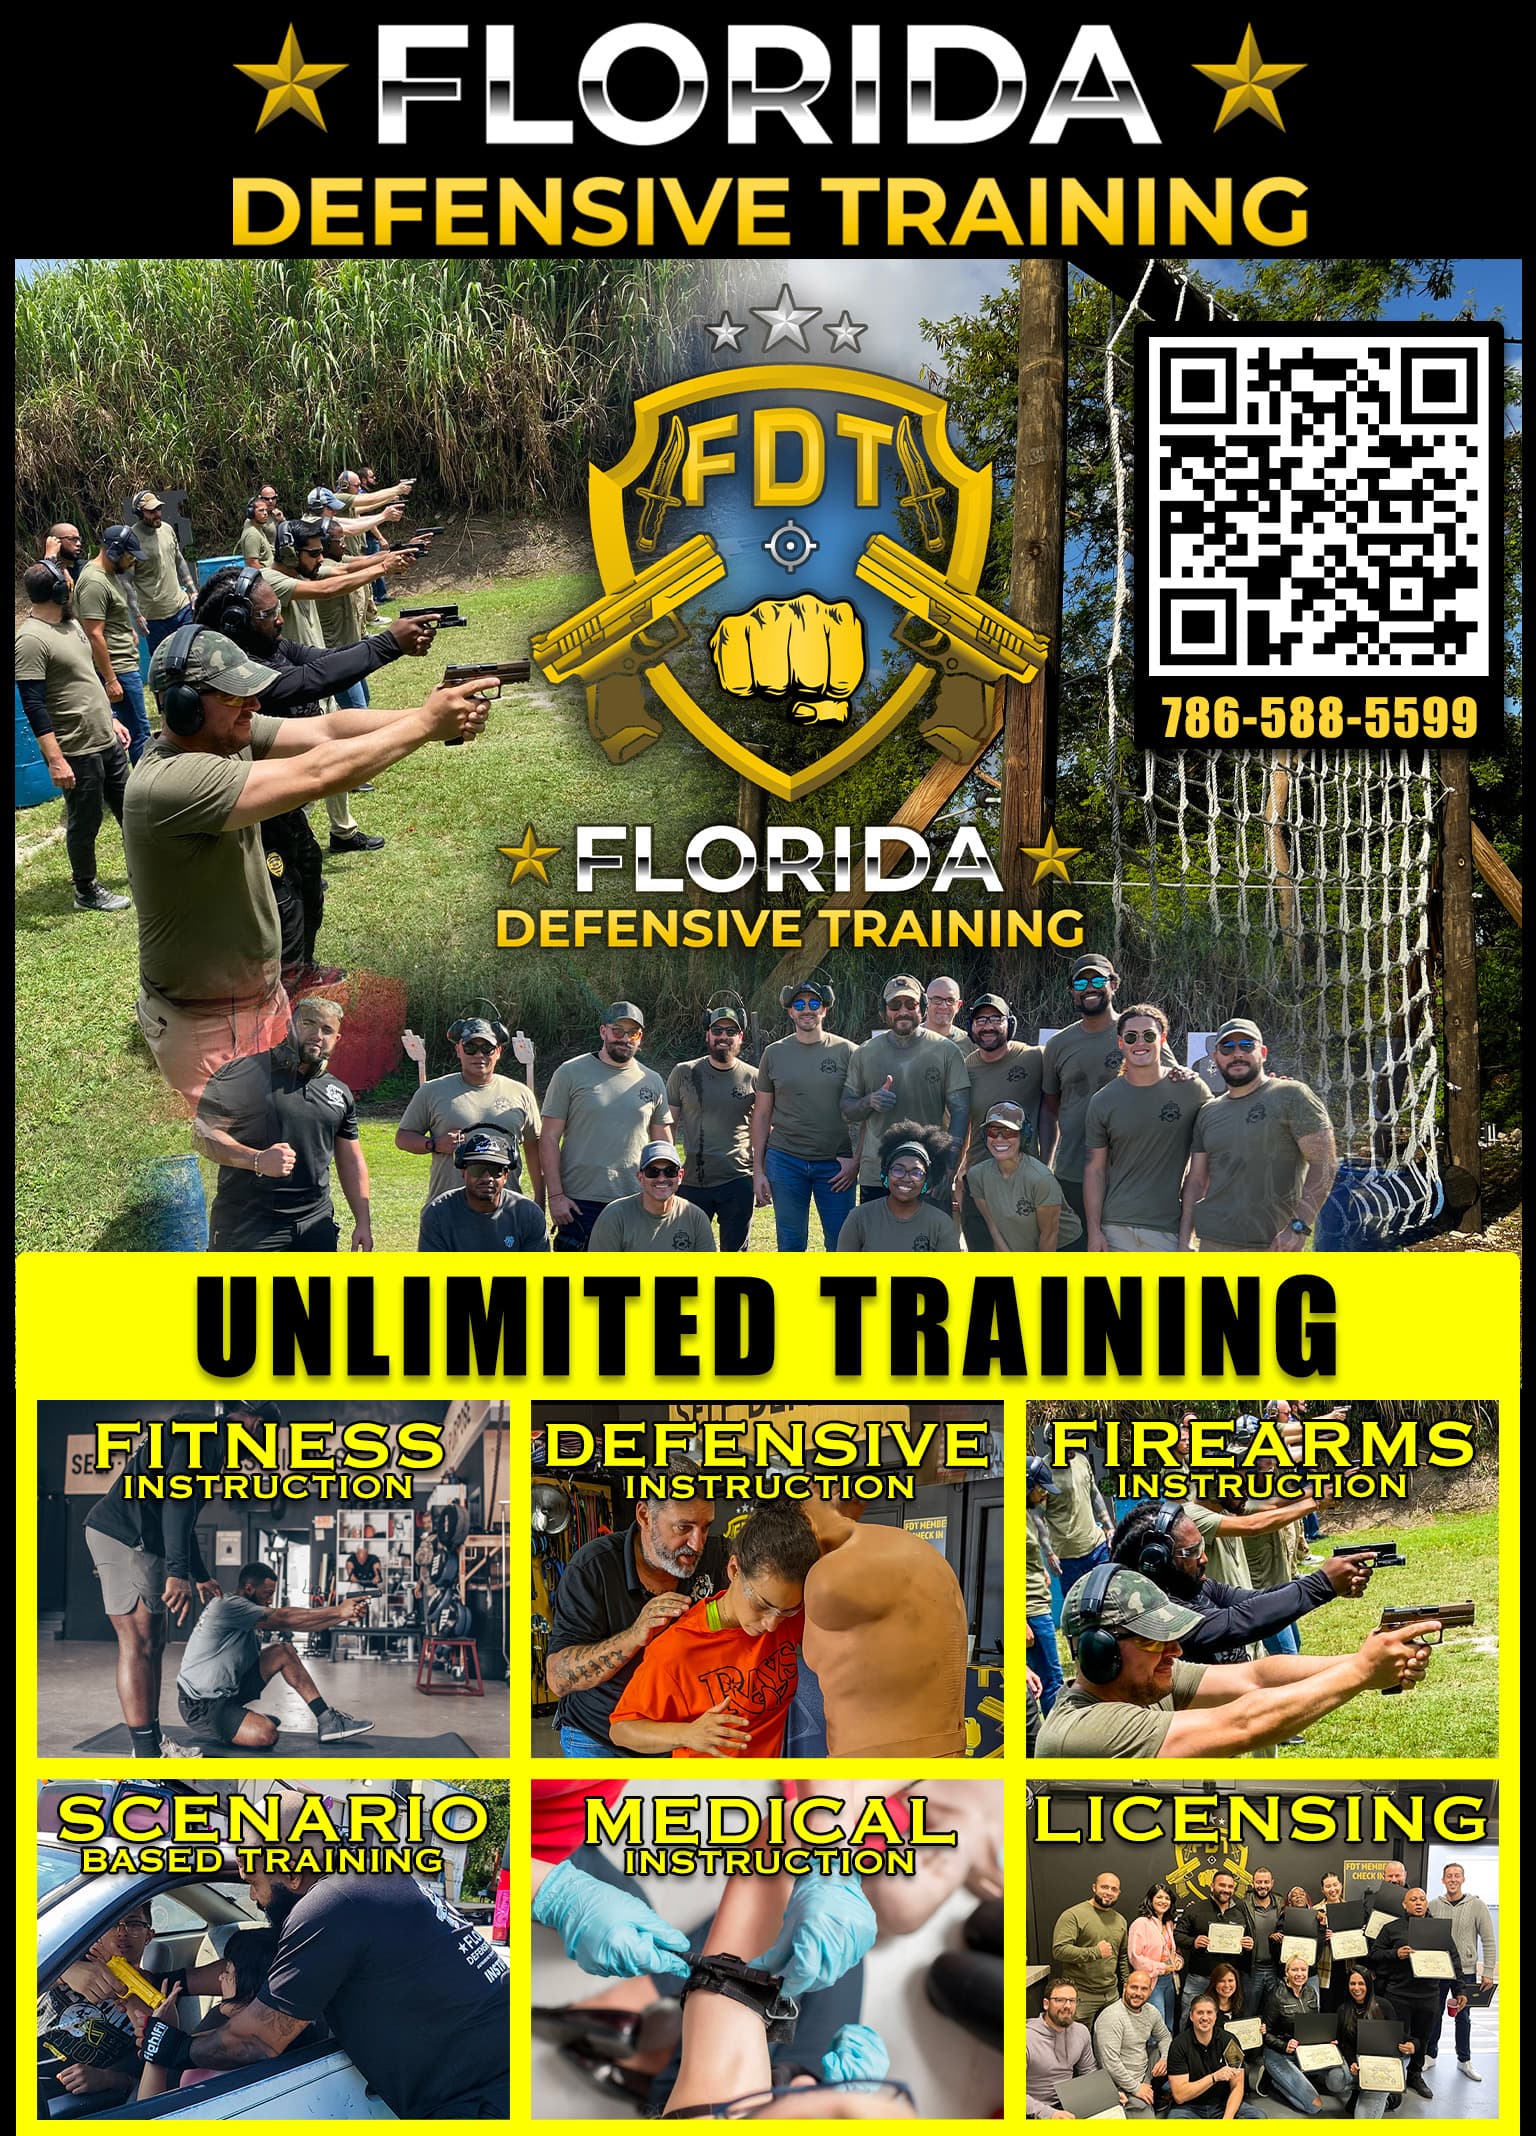 Florida Defensive Training in Miami. Florida's #1 Self Defensive Training School in Miami.